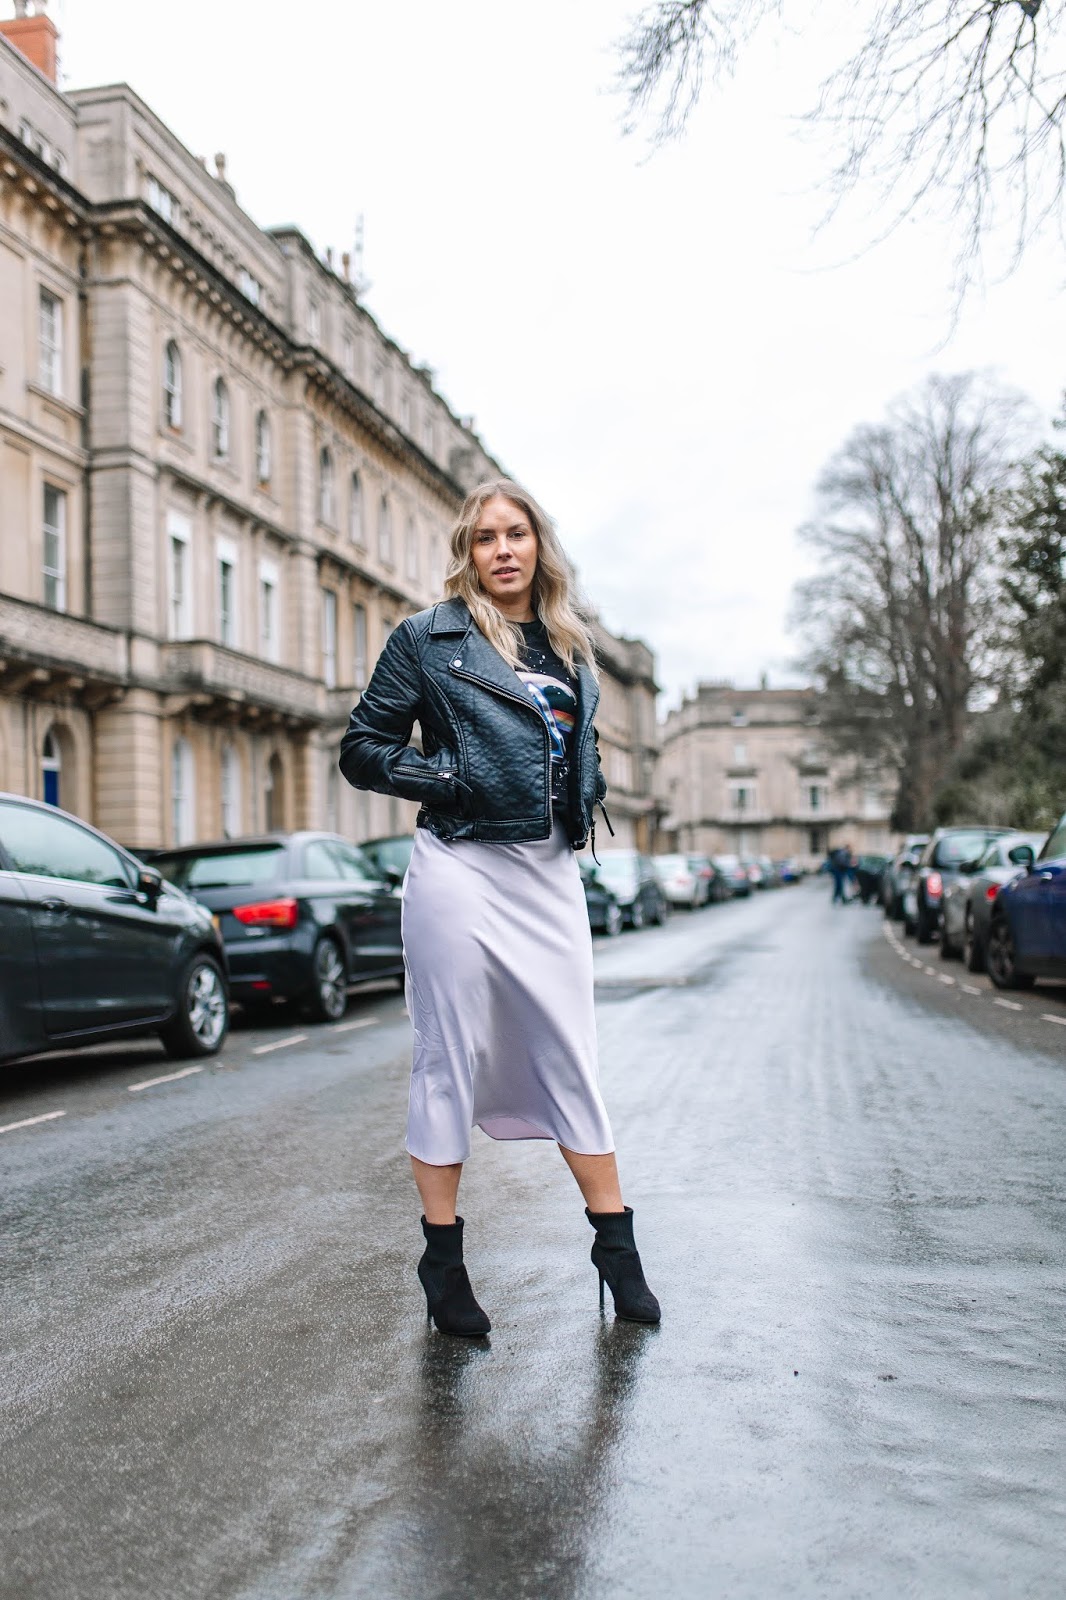 Fashion | The Skirt Everyone Is Wearing - Bias Cut Midi Skirt | Rachel Emily Blog